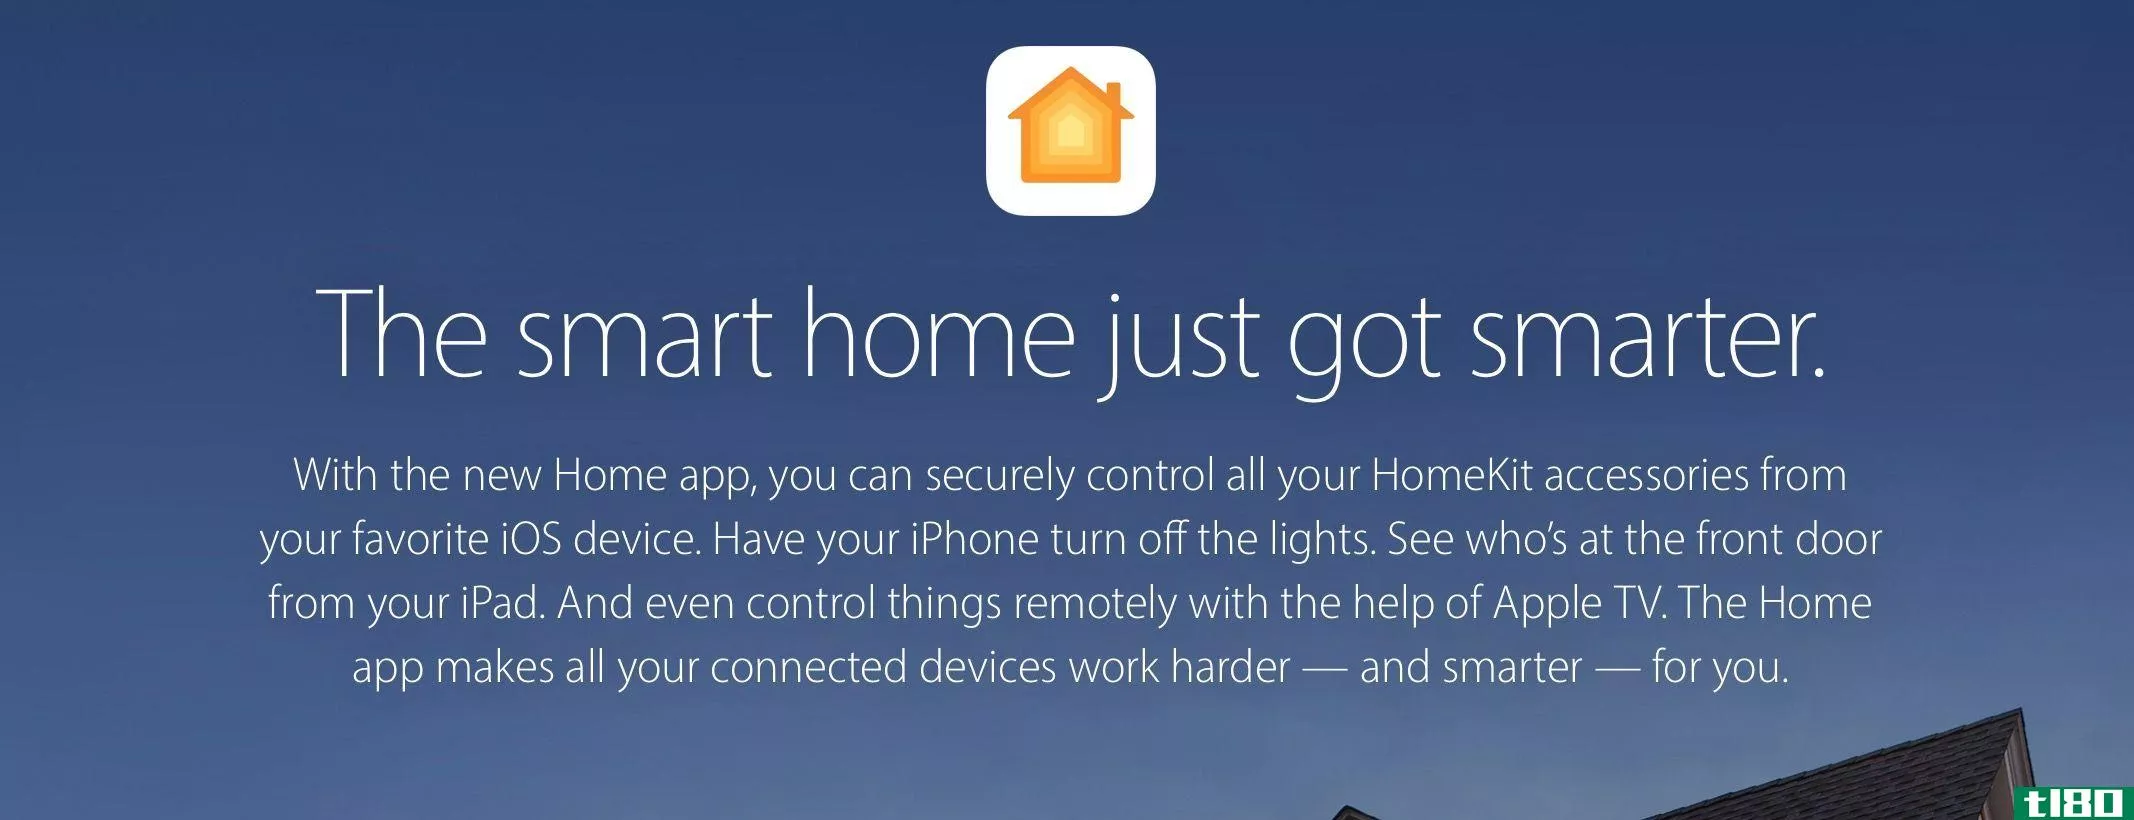 Apple HomeKit Web Page Promo